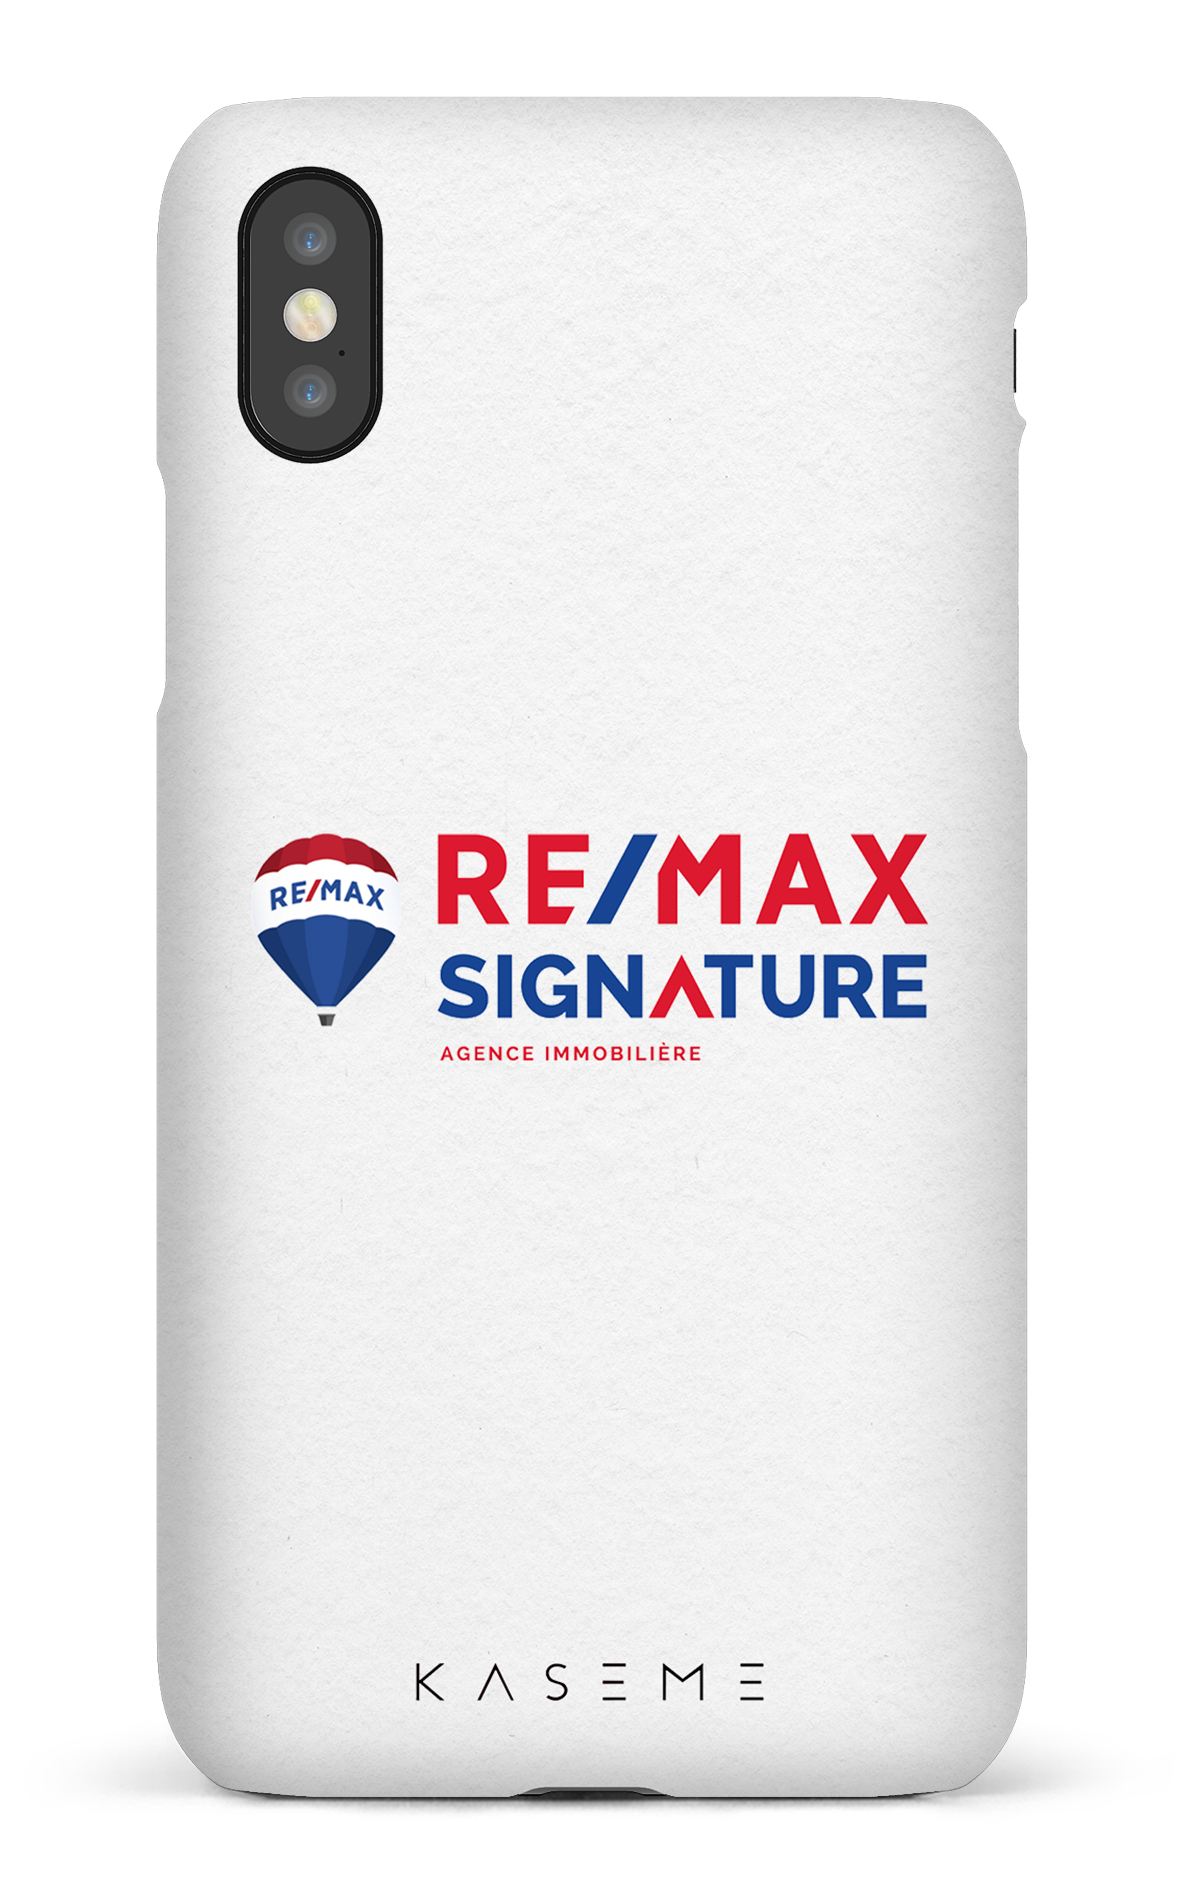 Remax Signature Blanc - iPhone X/XS